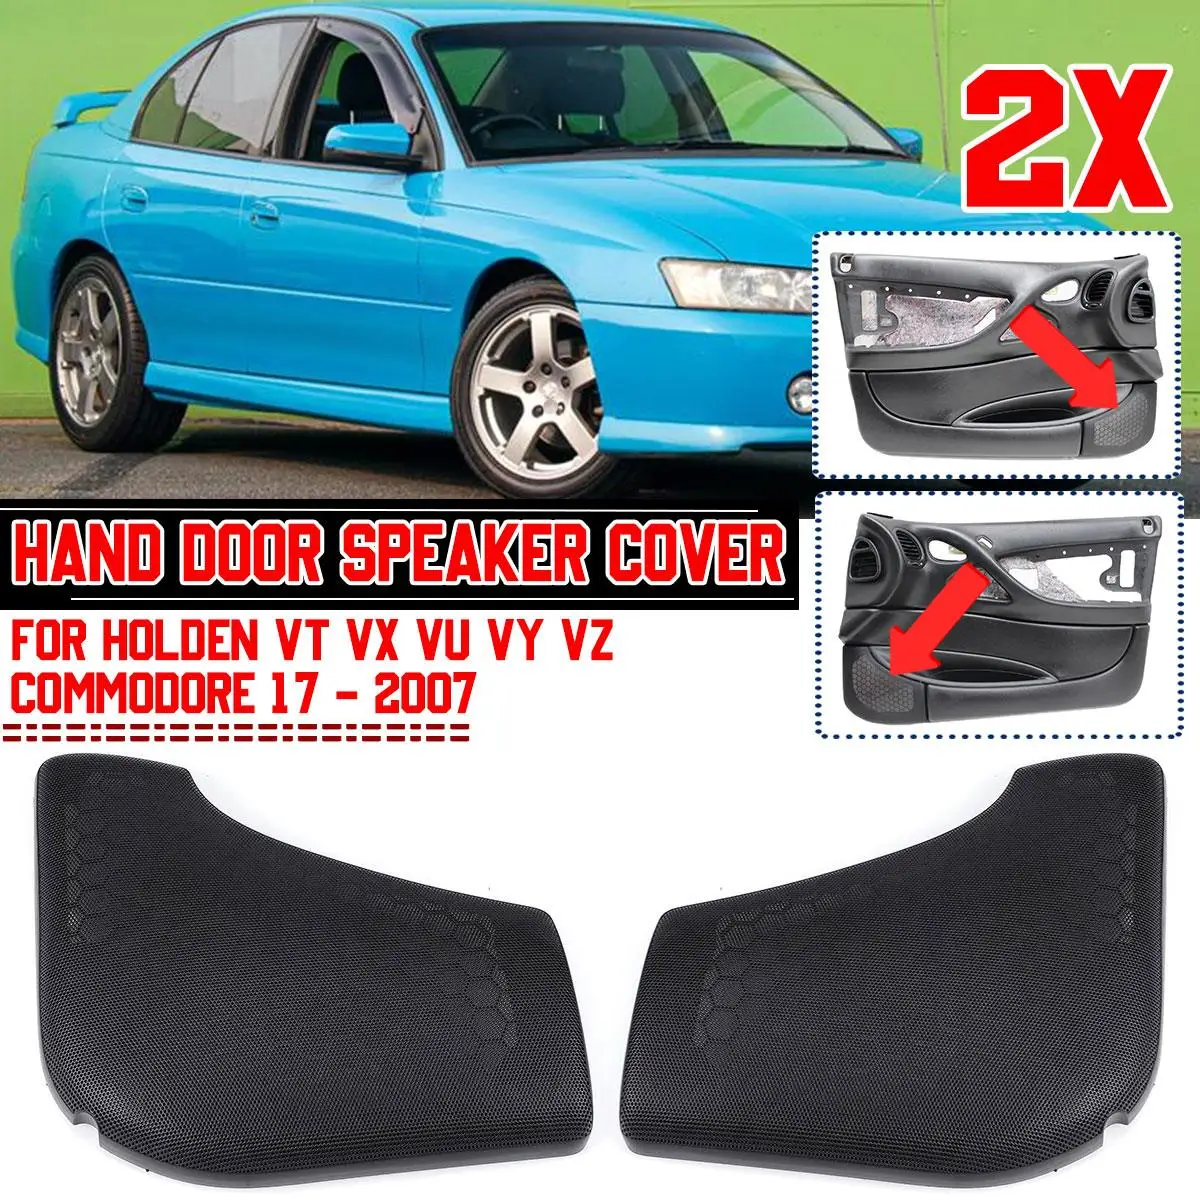 2x Auto Inner Hand Deur Speaker Covers Voor Holden Vt Vx Vu Vy Vz Commodore 1997-2007 Car Audio hoorn Luidspreker Trim Cover Shield